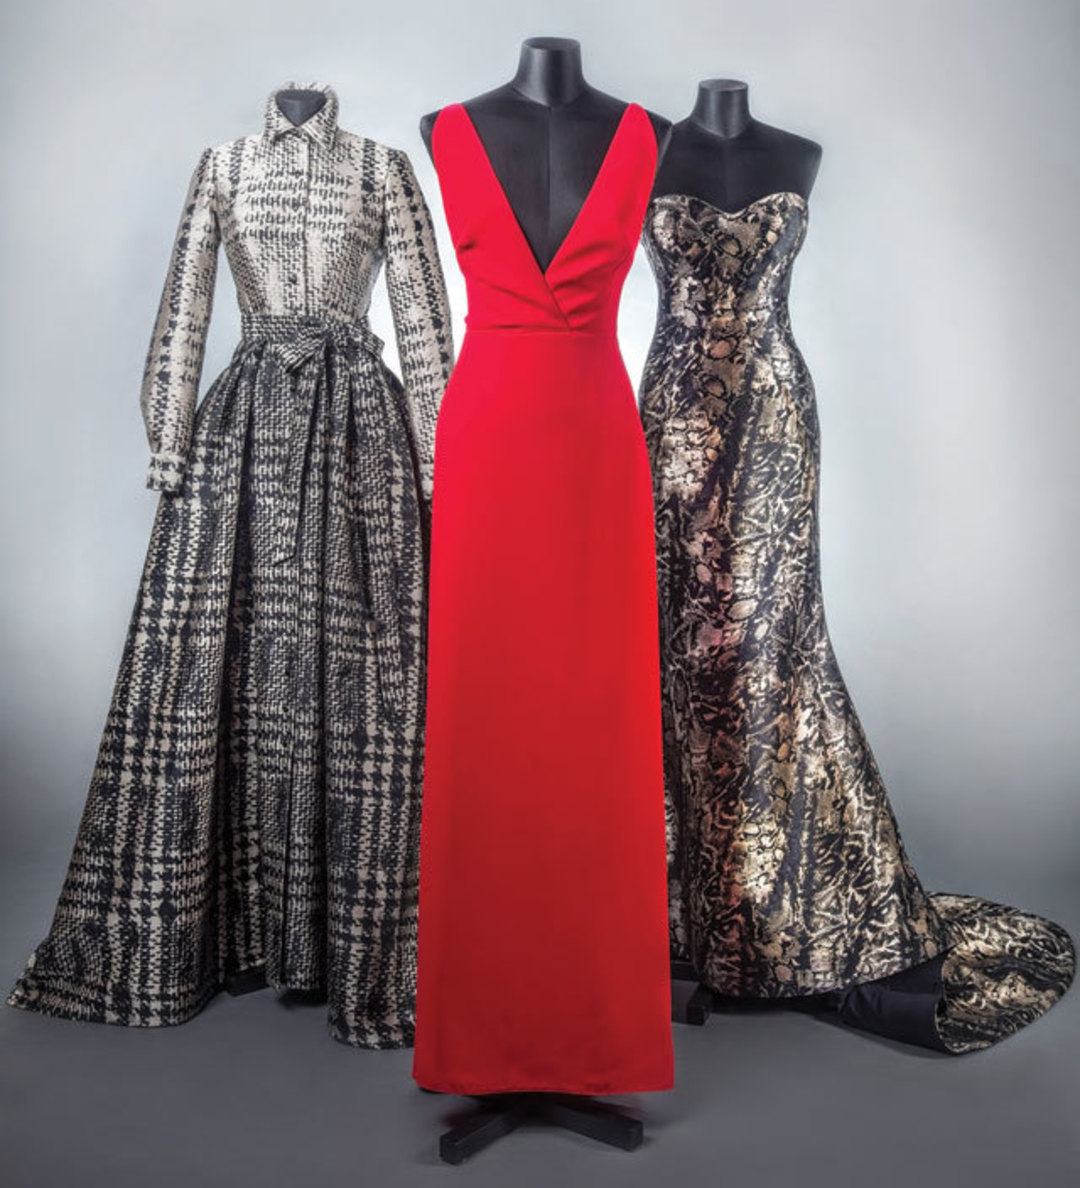 Three Gowns for Gala Season | Houstonia 